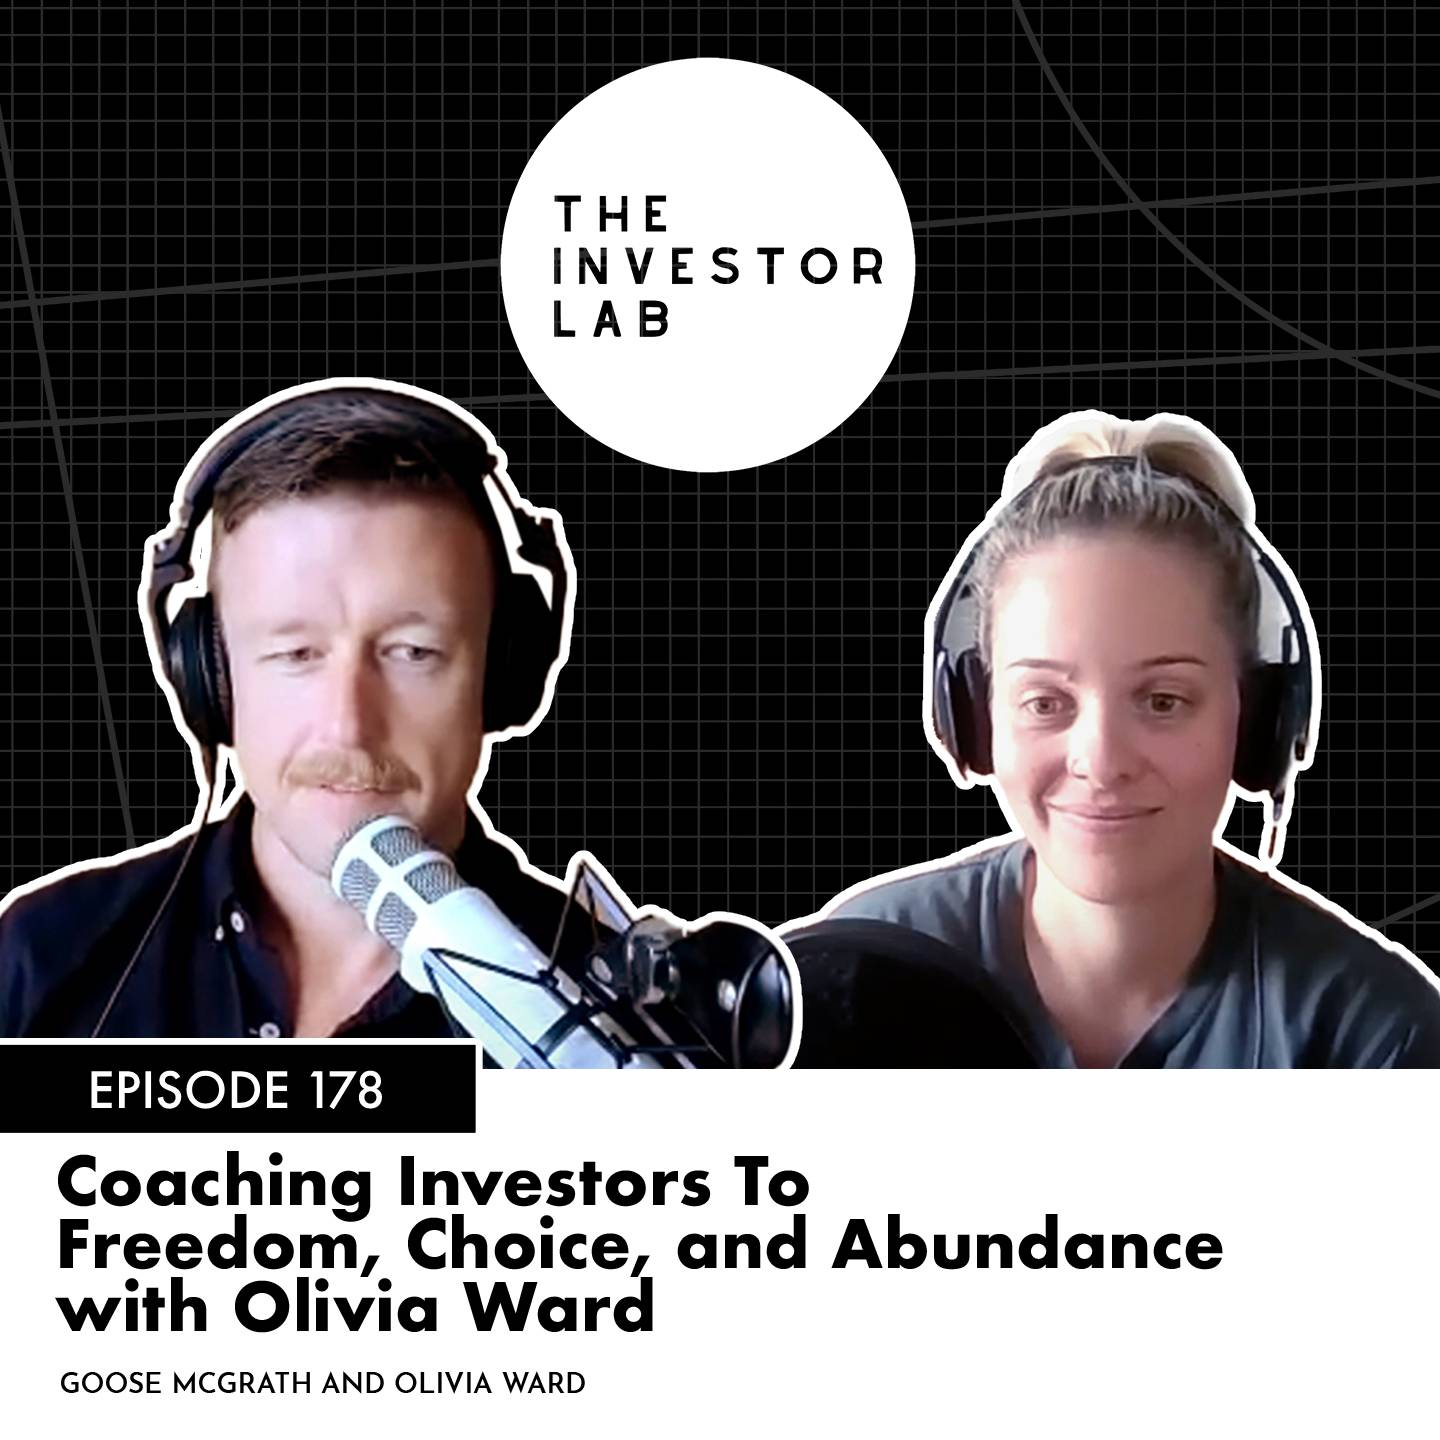 Coaching Investors To Freedom, Choice, and Abundance with Olivia Ward